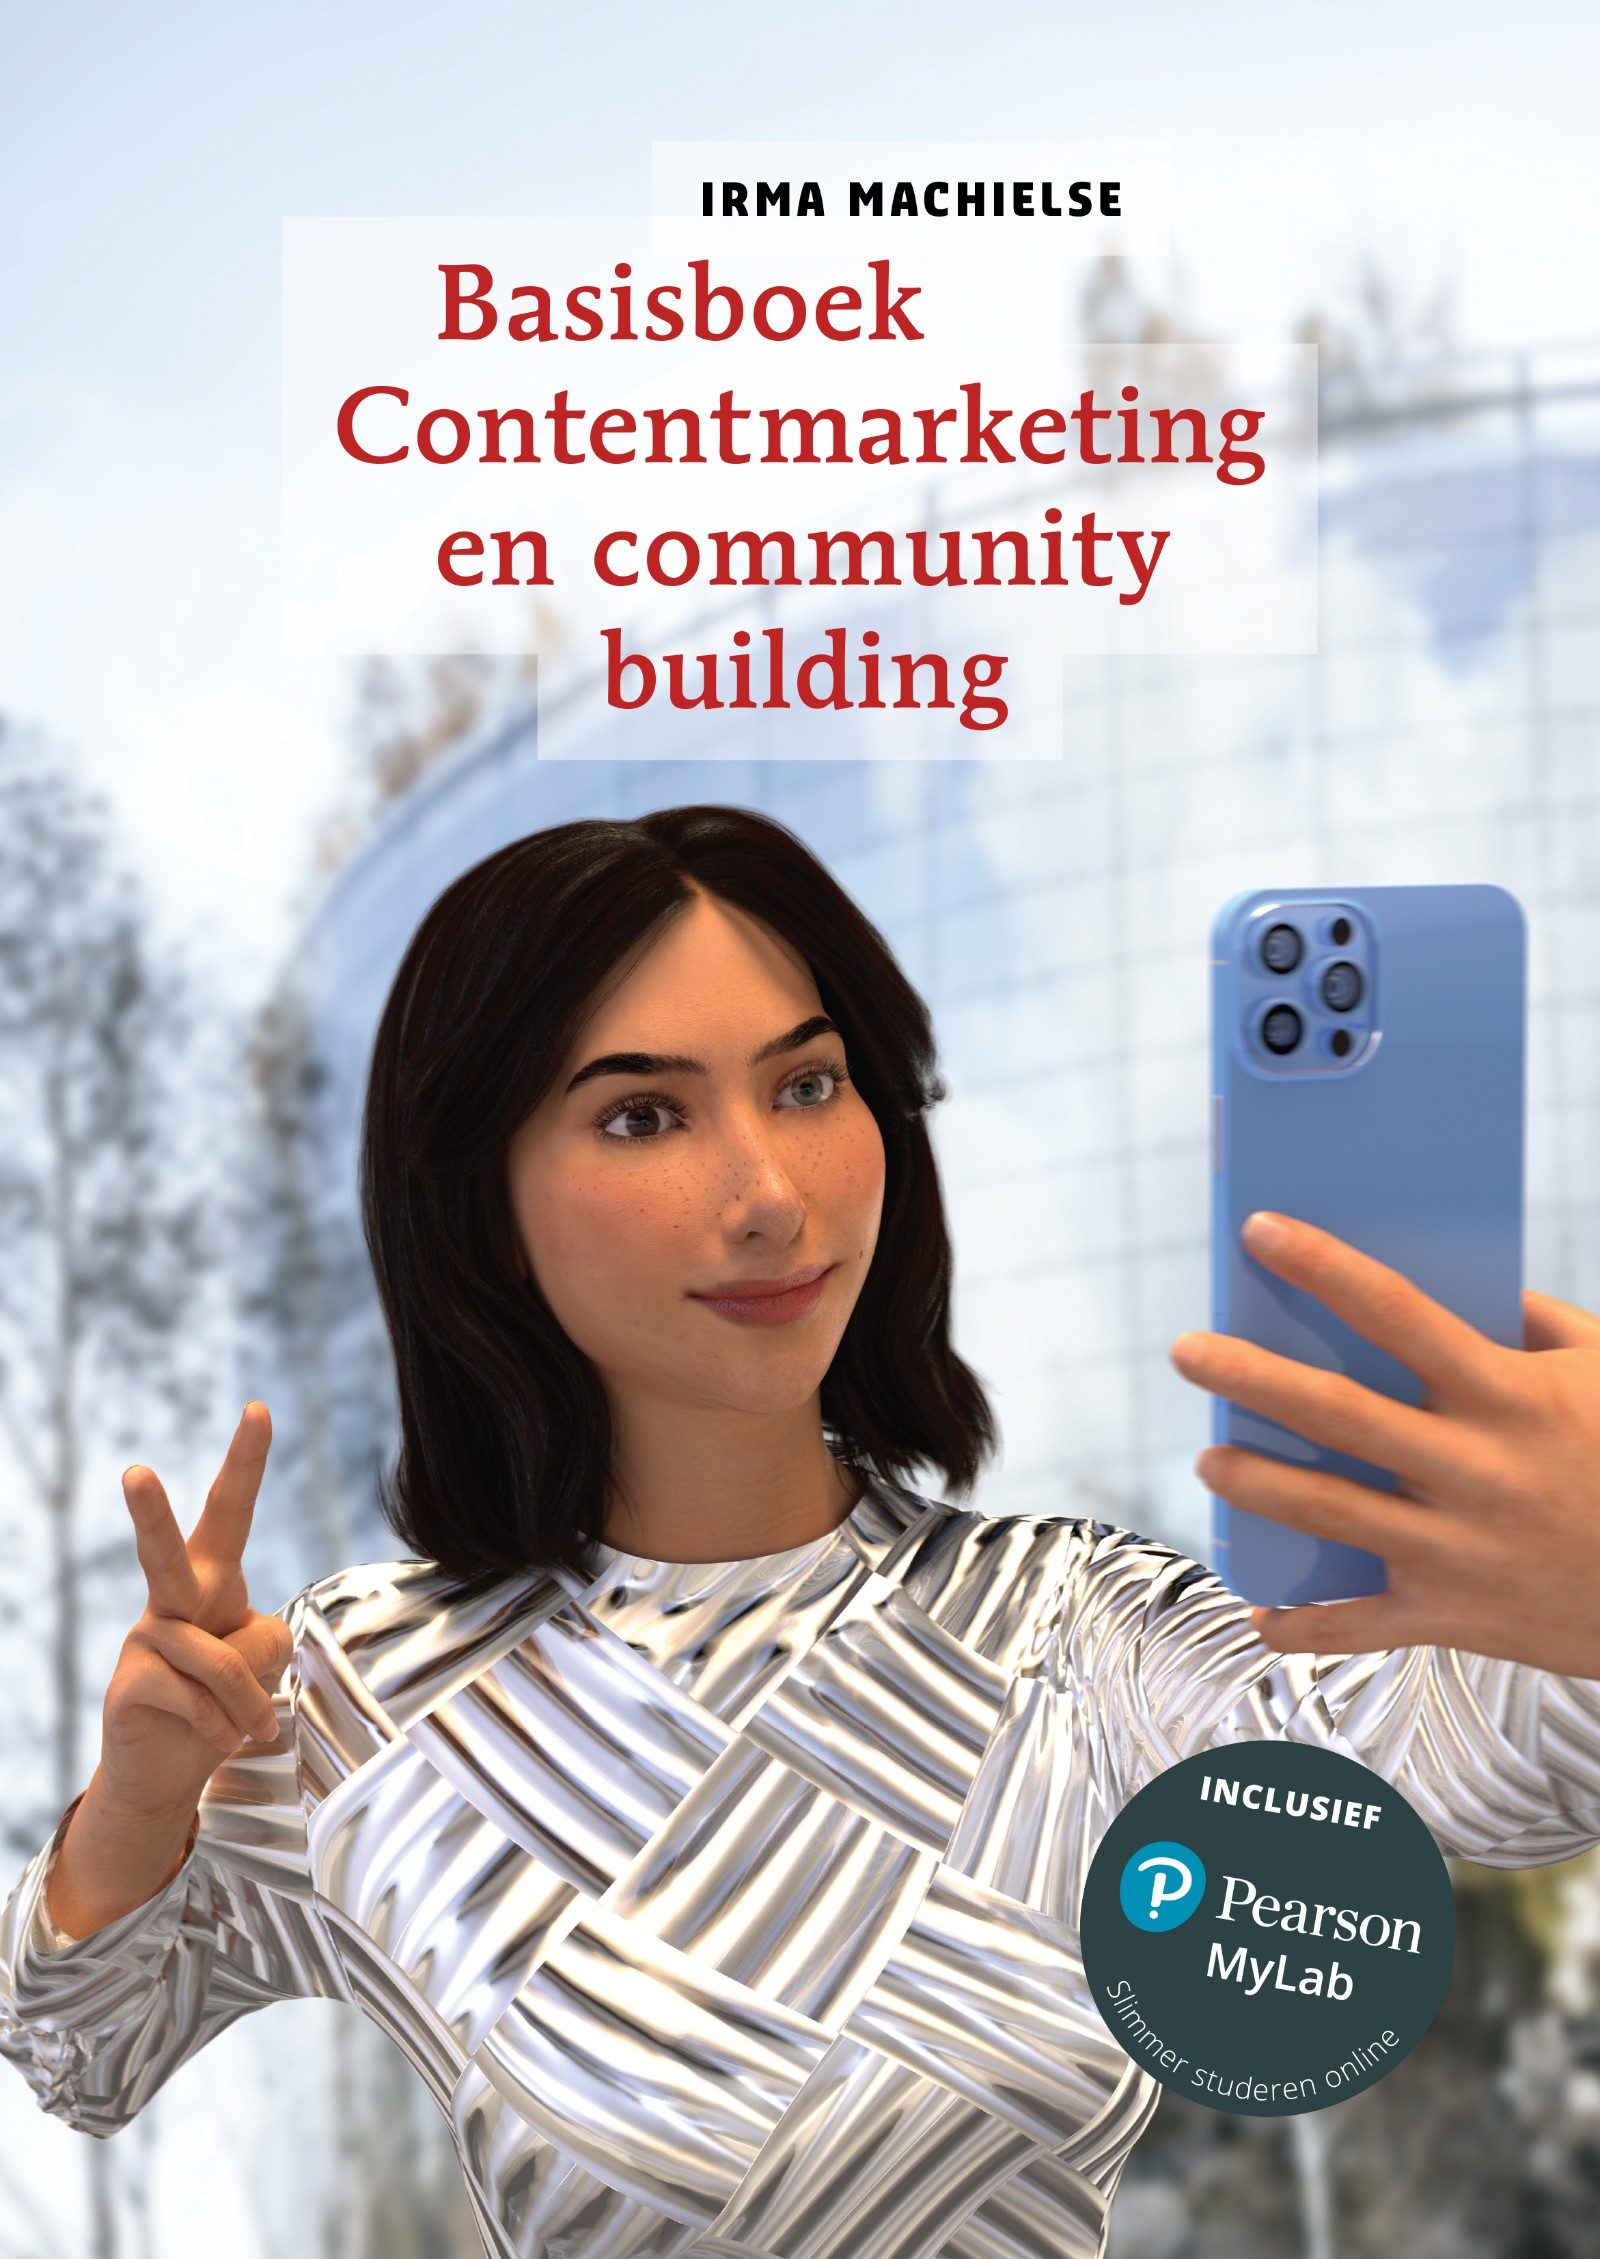 Cover Contentmarketing en community management met MyLab NL